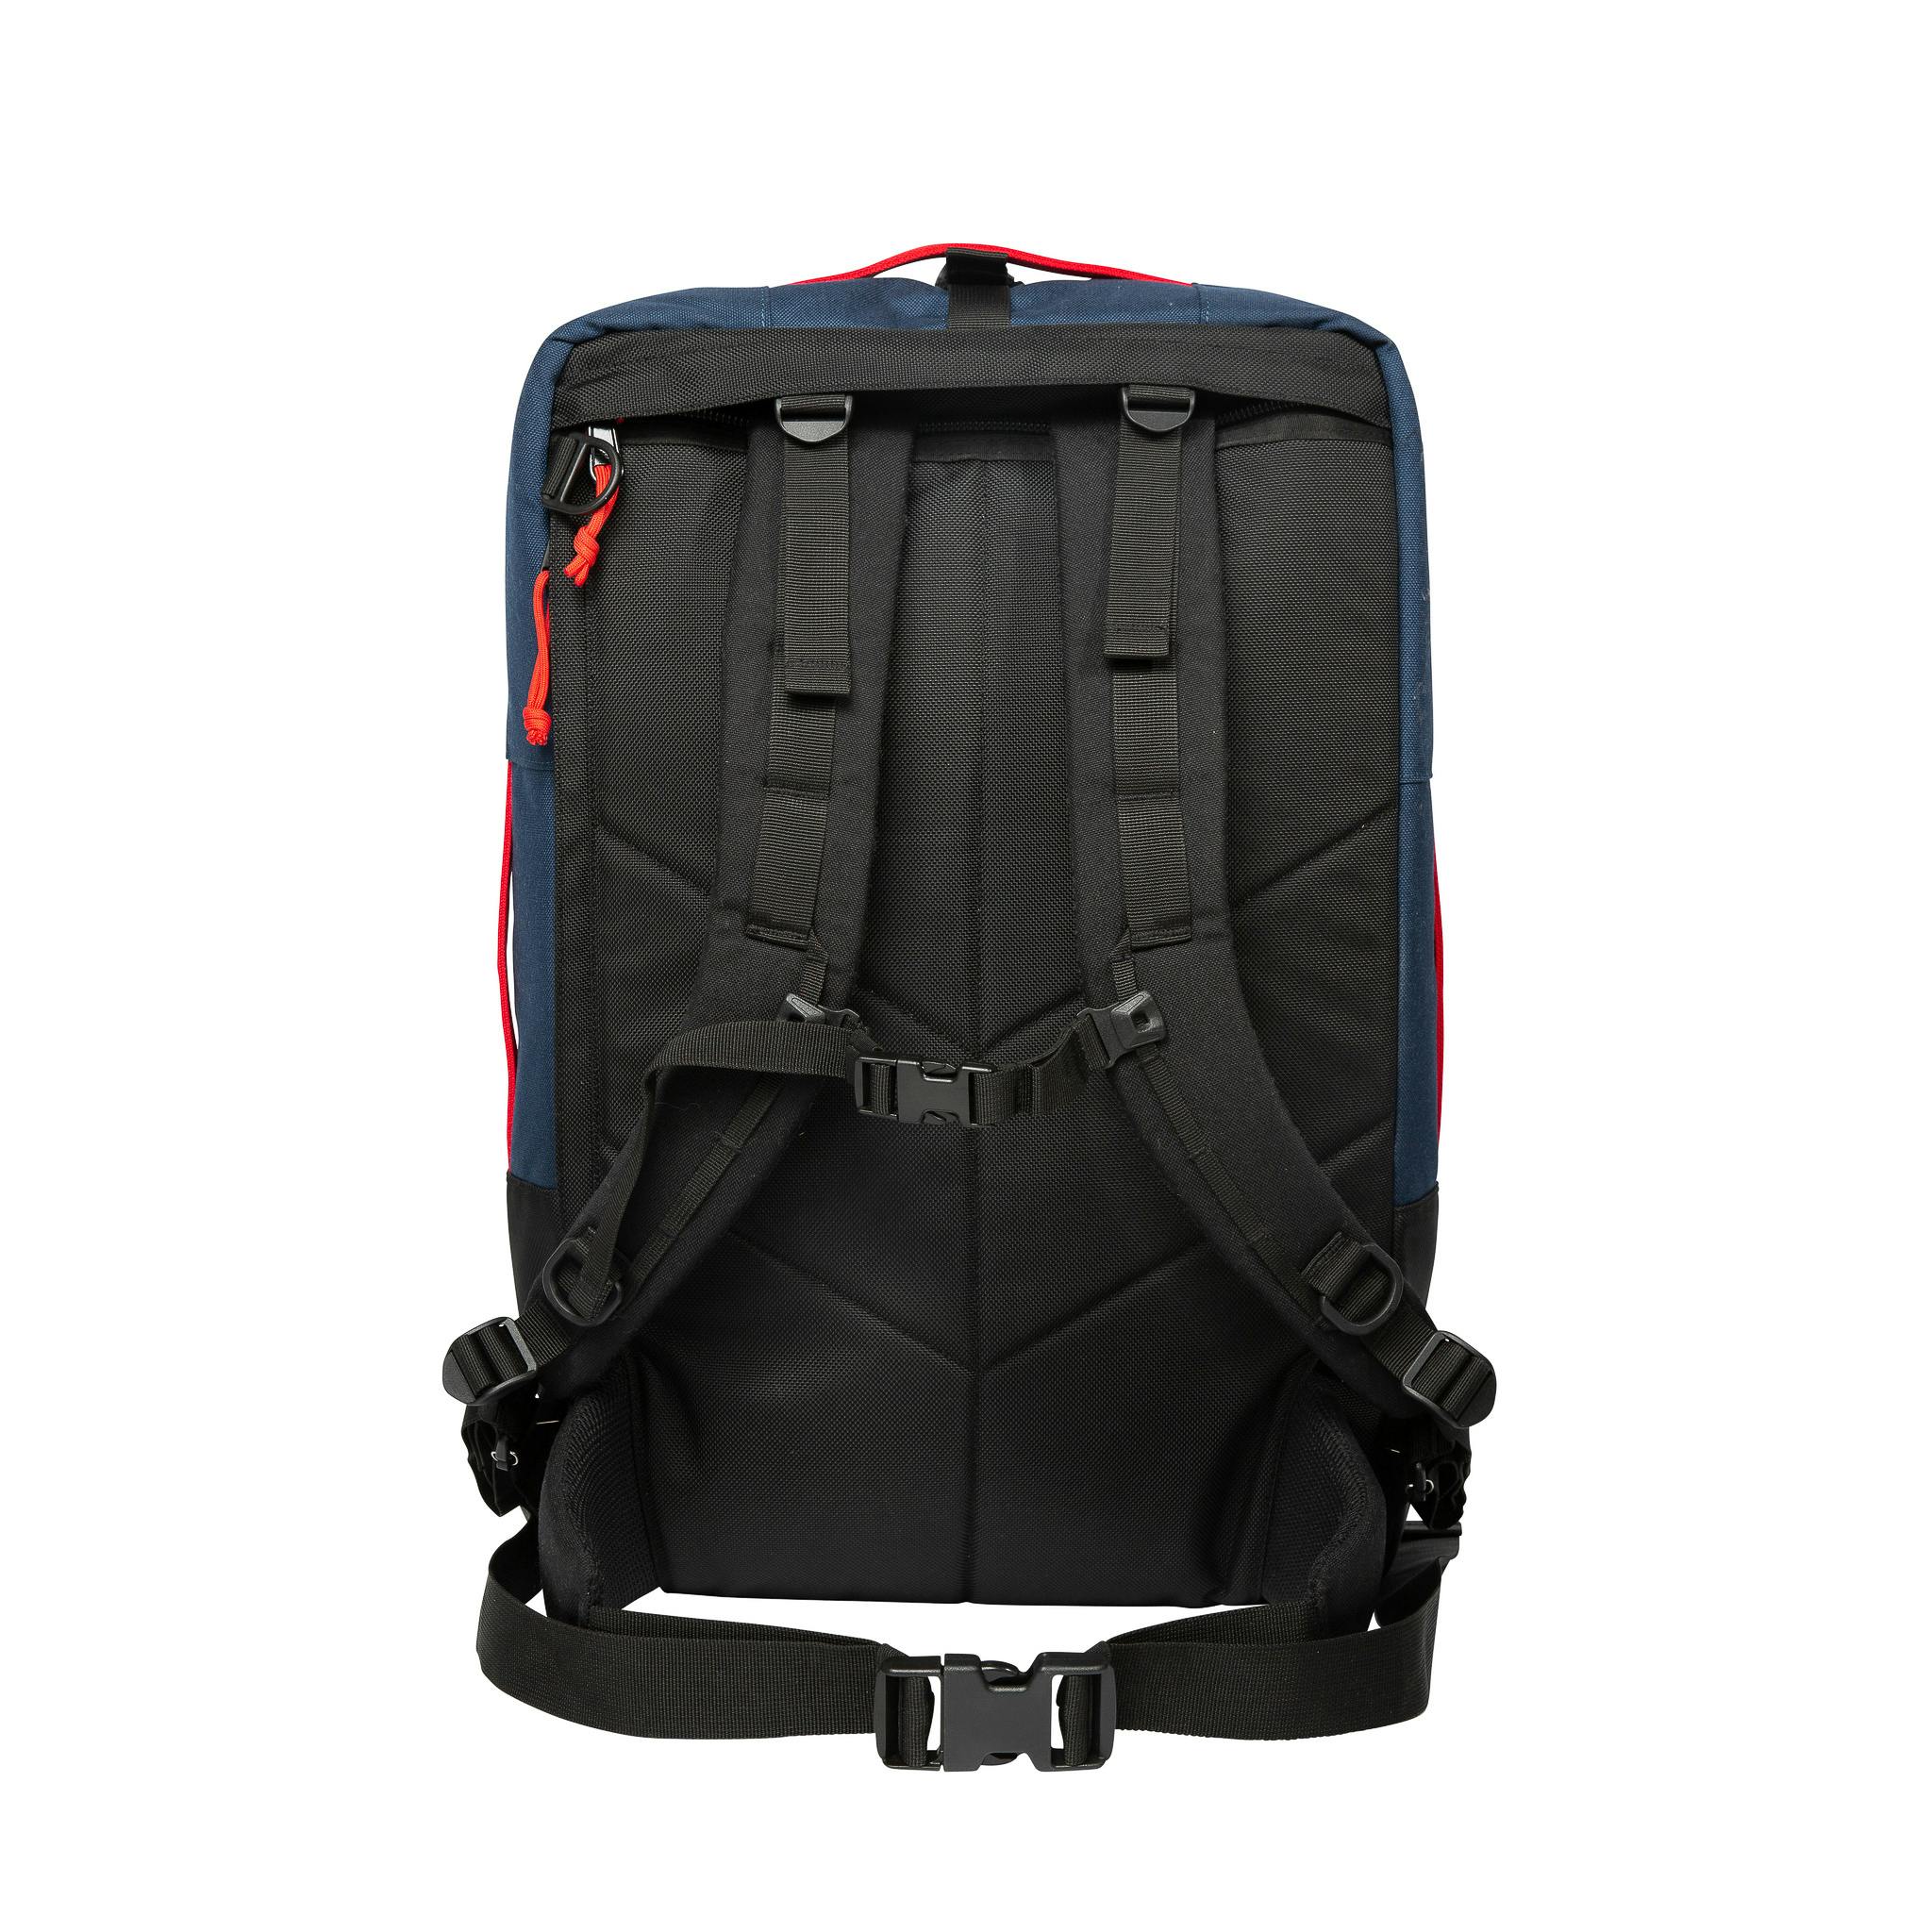 Topo Designs Travel Bag - 40L